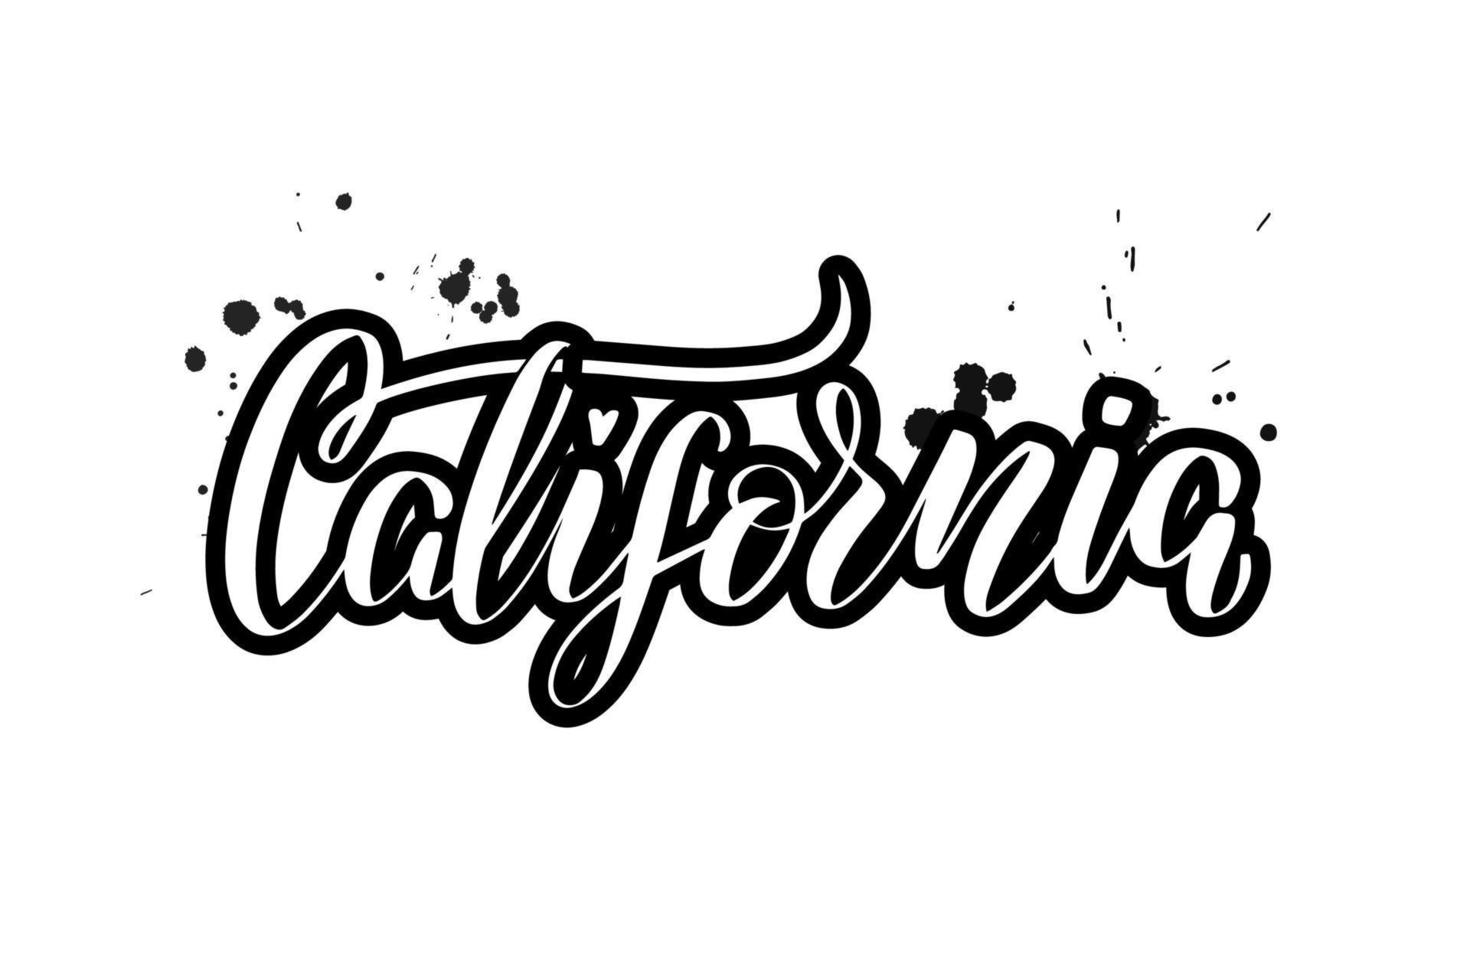 pincel inspirador escrito a mano con letras de california. ilustración de caligrafía vectorial aislada sobre fondo blanco. tipografía para pancartas, insignias, postales, camisetas, impresiones, carteles. vector